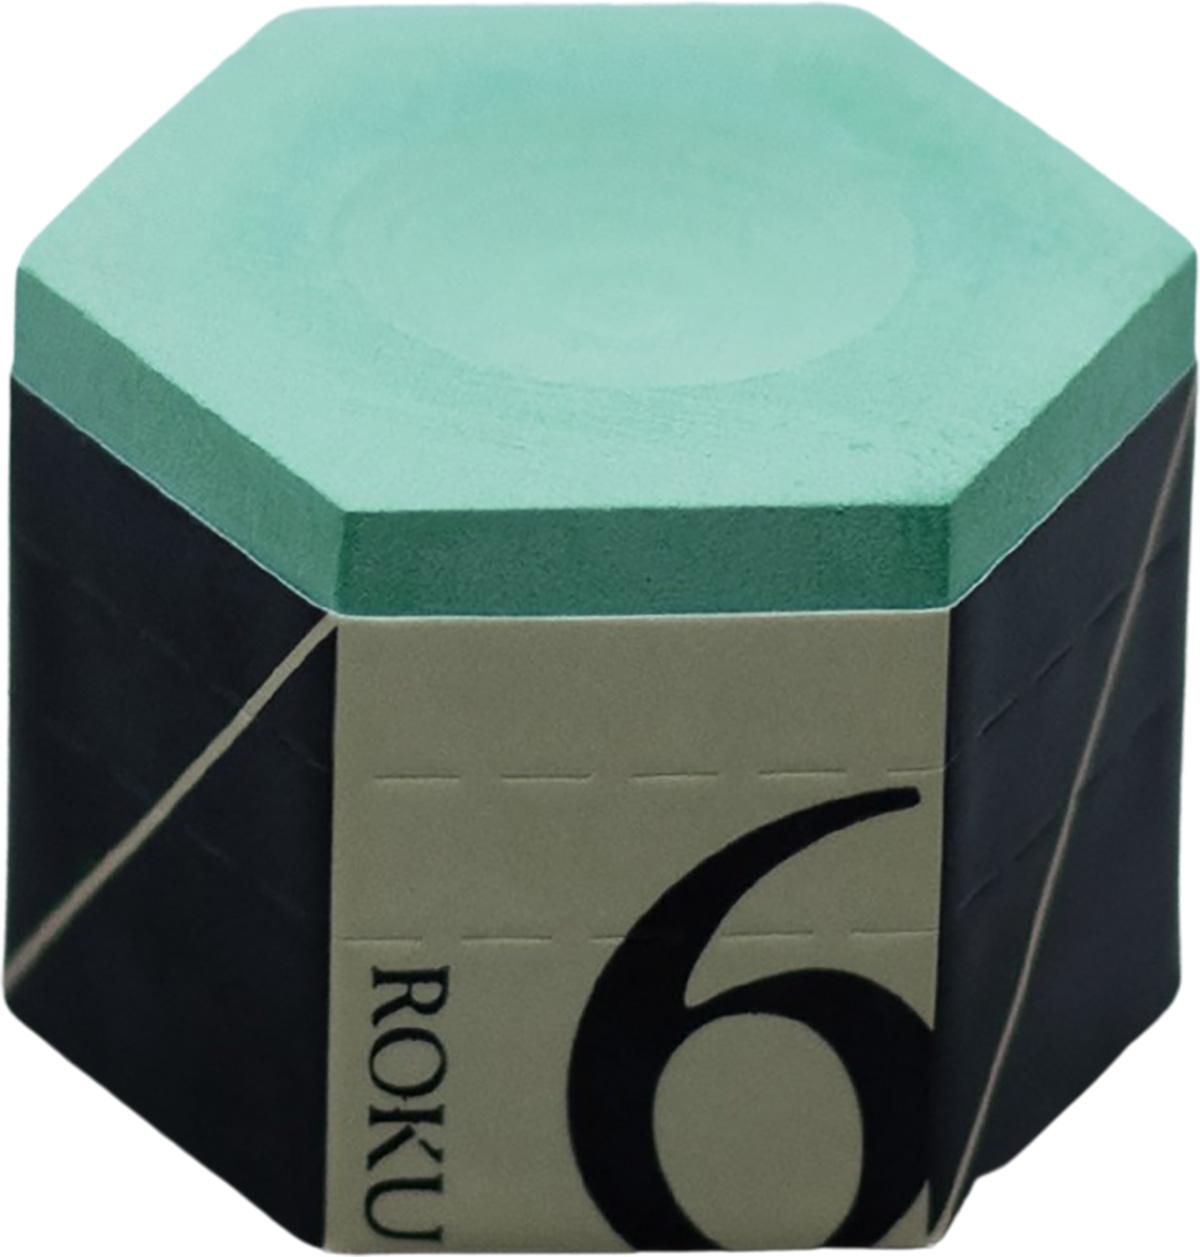 Kamui 0.98B Chalk - 1 Cube